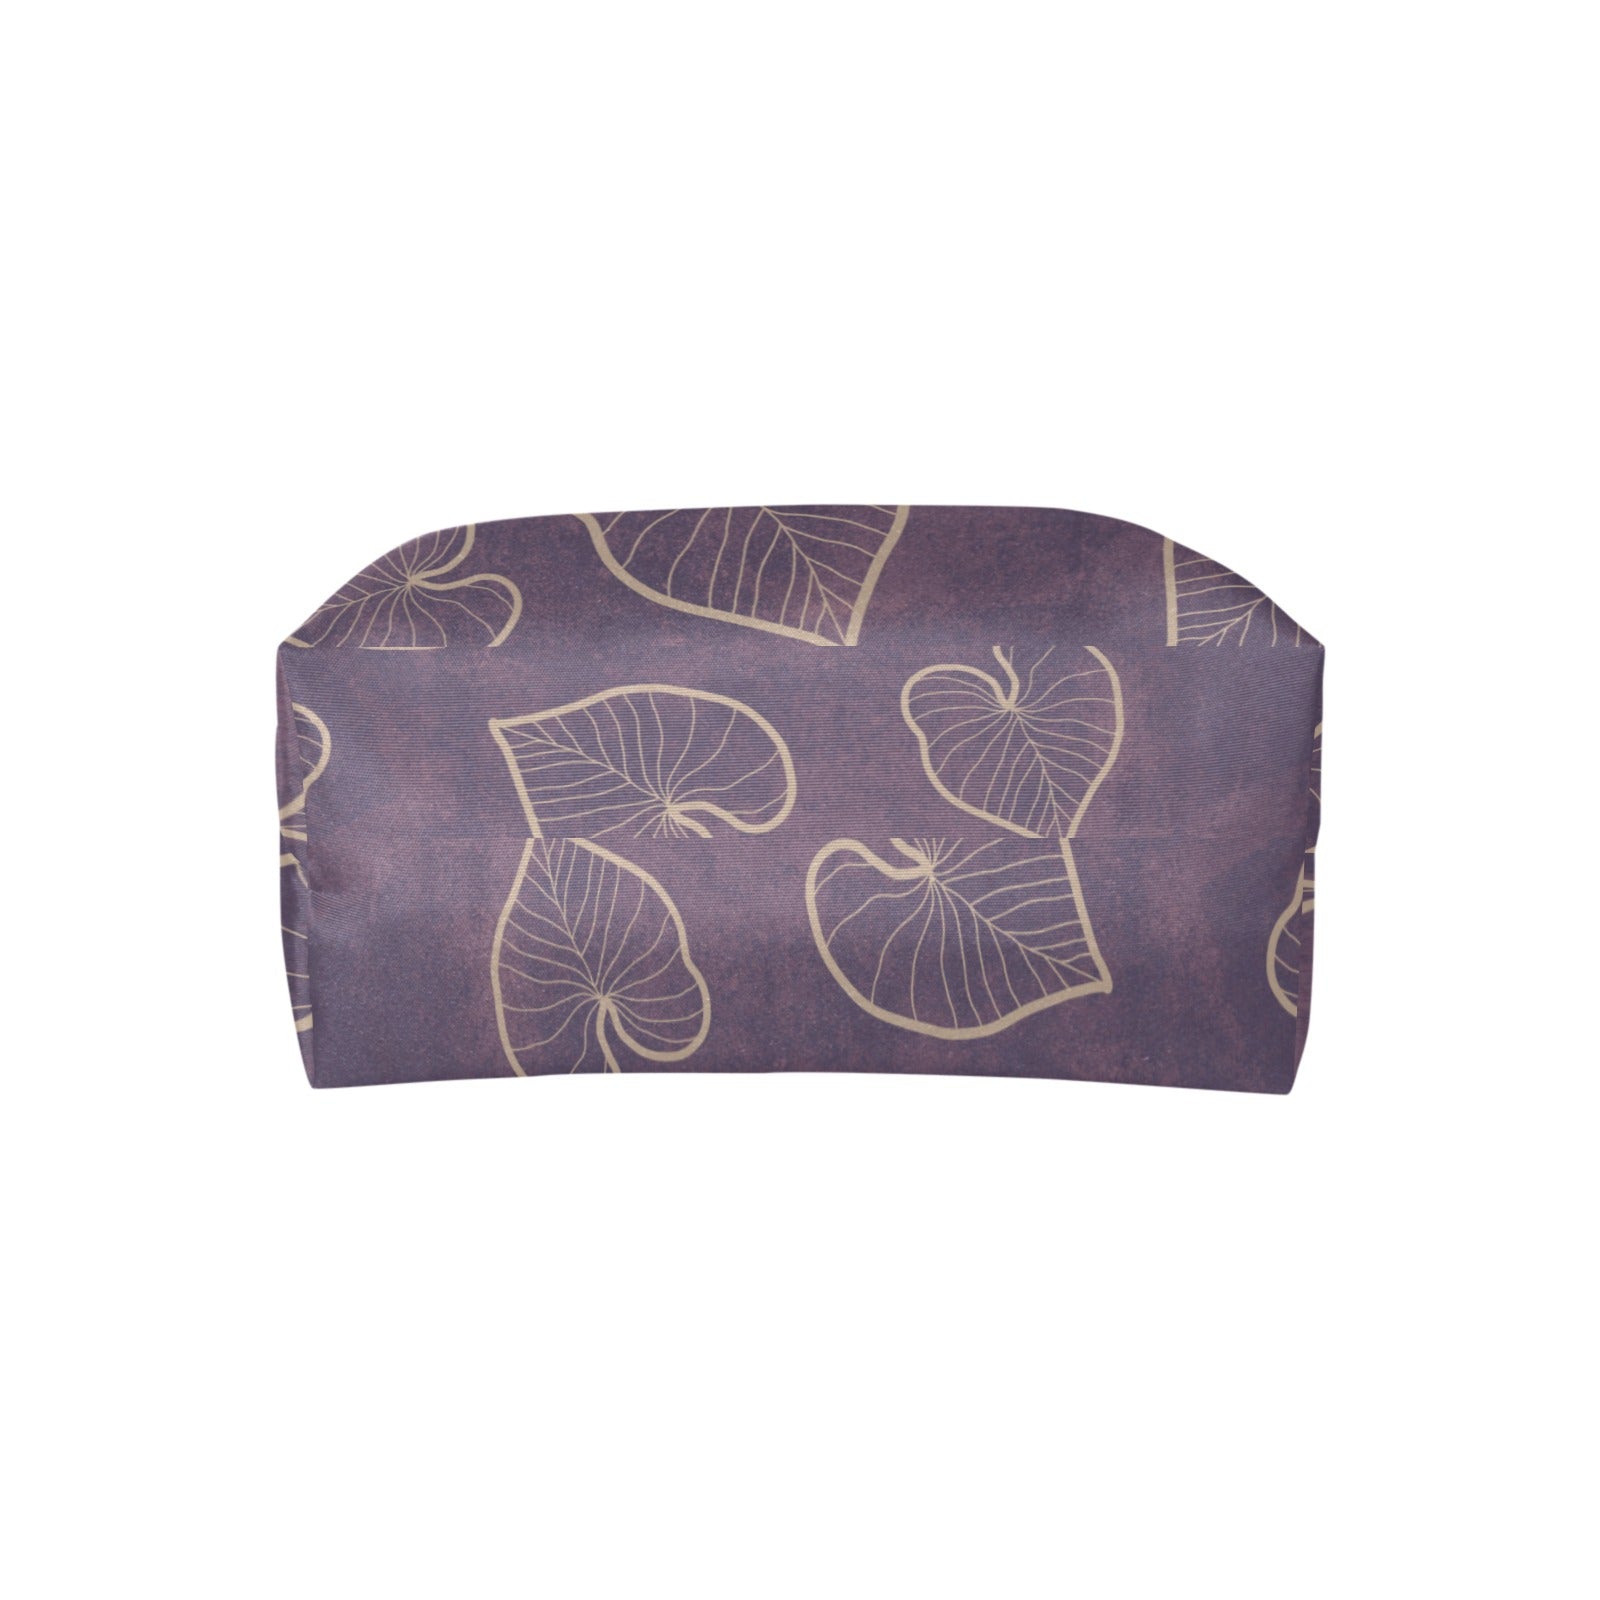 Kalo Taro Hawaiian Print Purple Watercolor Single Shoulder Handbag